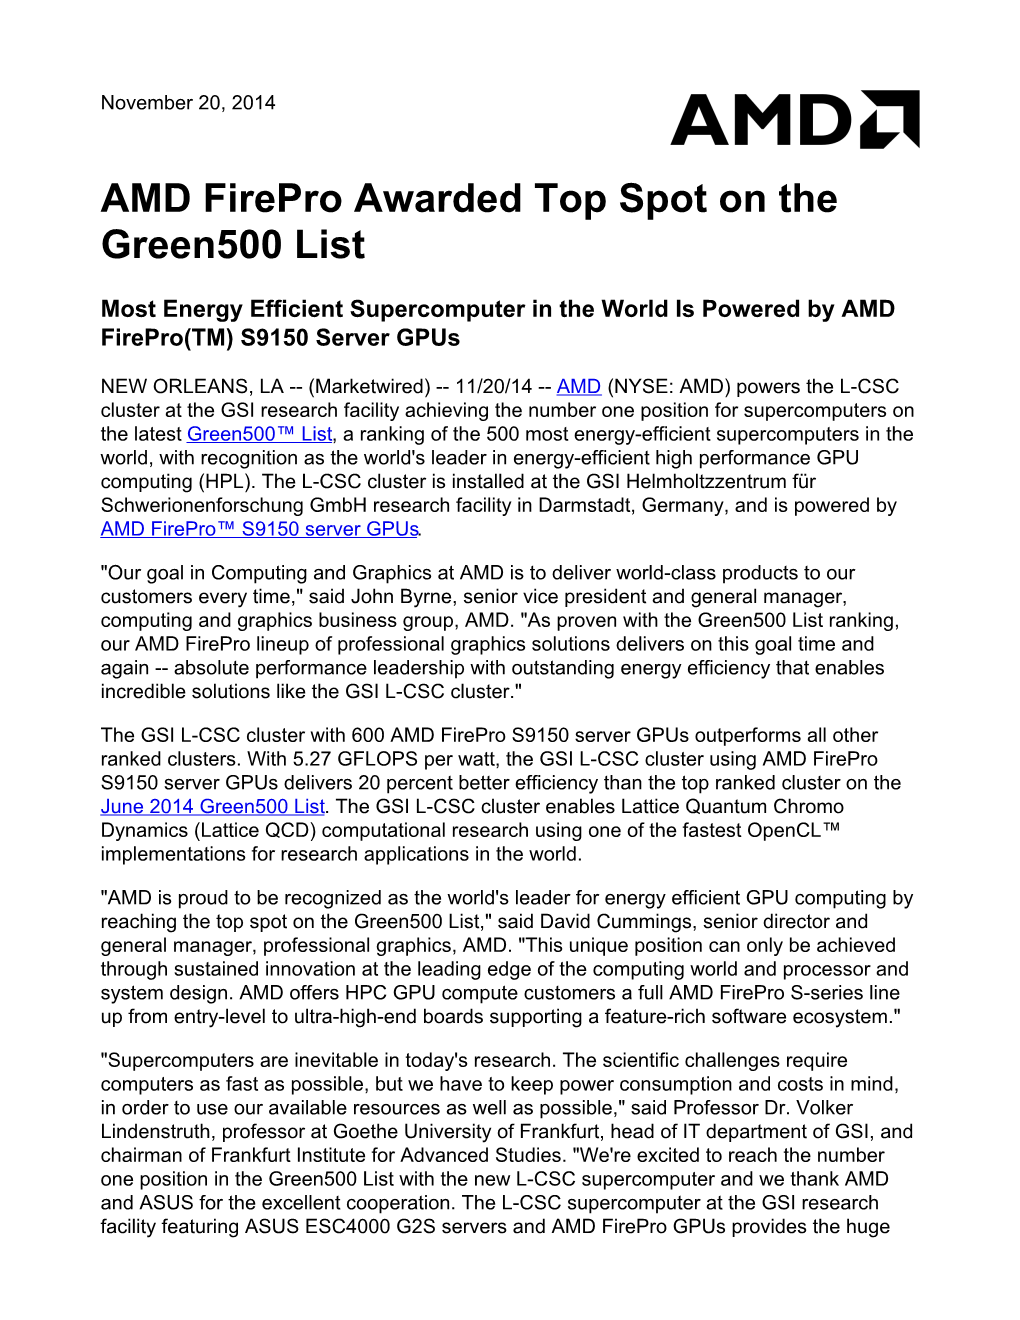 AMD Firepro Awarded Top Spot on the Green500 List